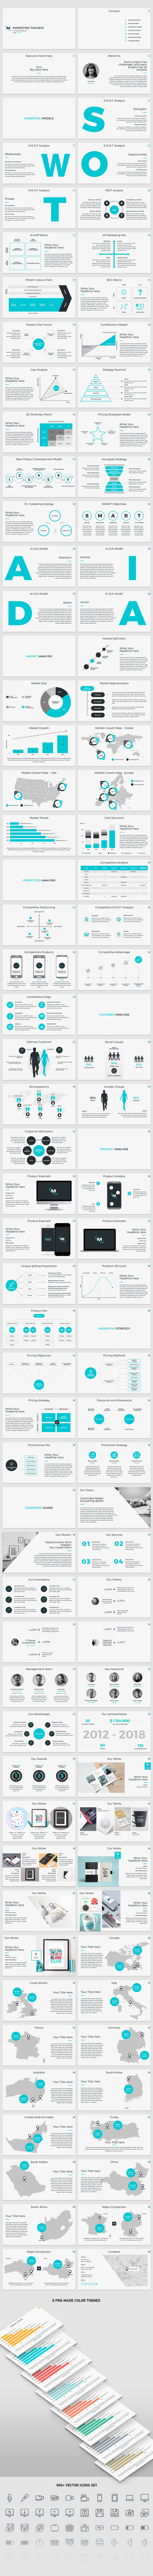 marketing   Project Plan Proposal Powerpoint Keynote Toolbox best trend template